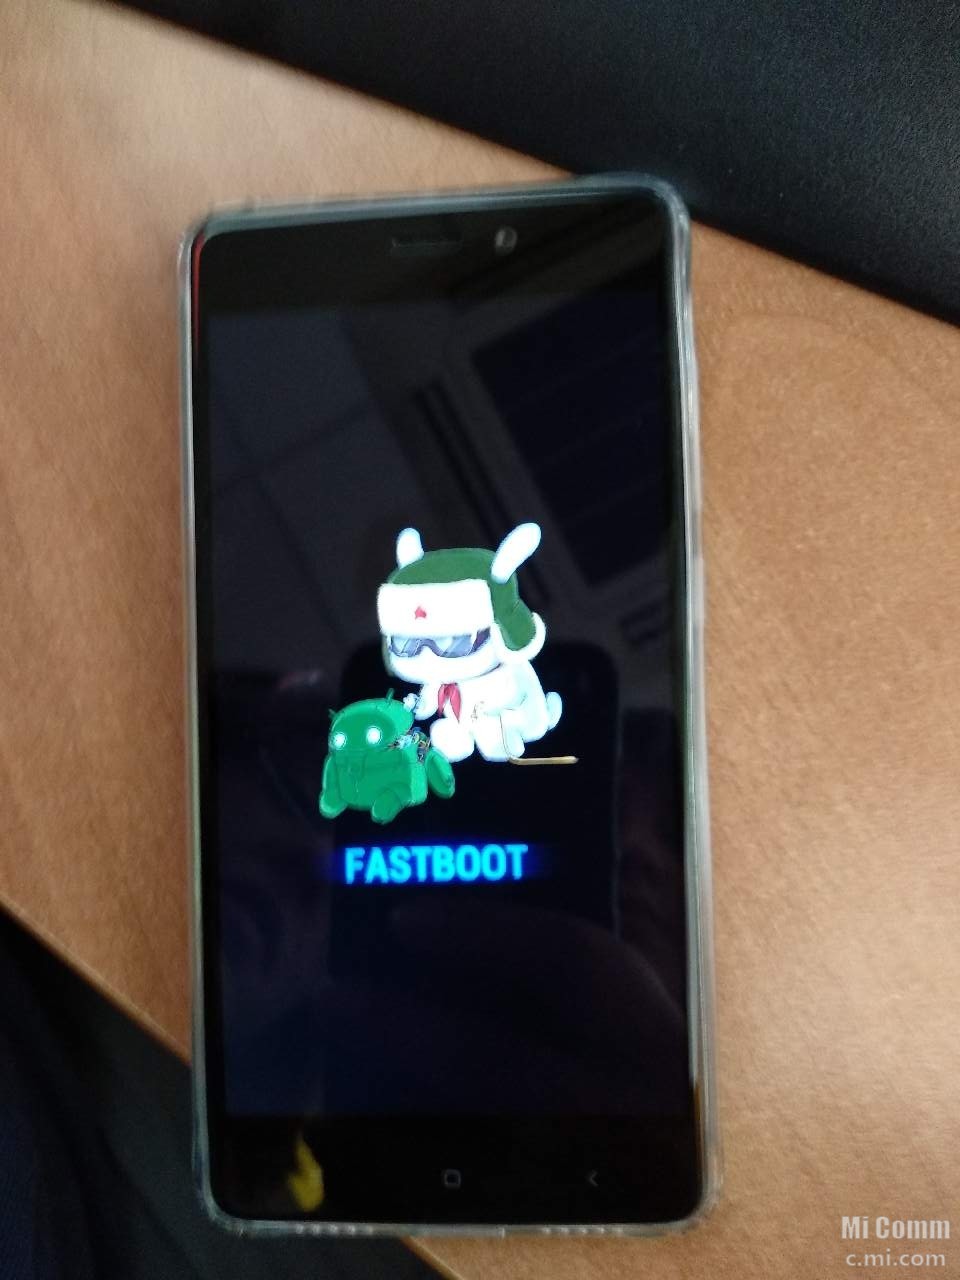 Fastboot redmi 8 pro. Xiaomi Redmi Note 8 Pro Fastboot. Xiaomi Redmi Note 7 Fastboot. Fastboot Xiaomi Redmi 4x. Fastboot Xiaomi 8t.